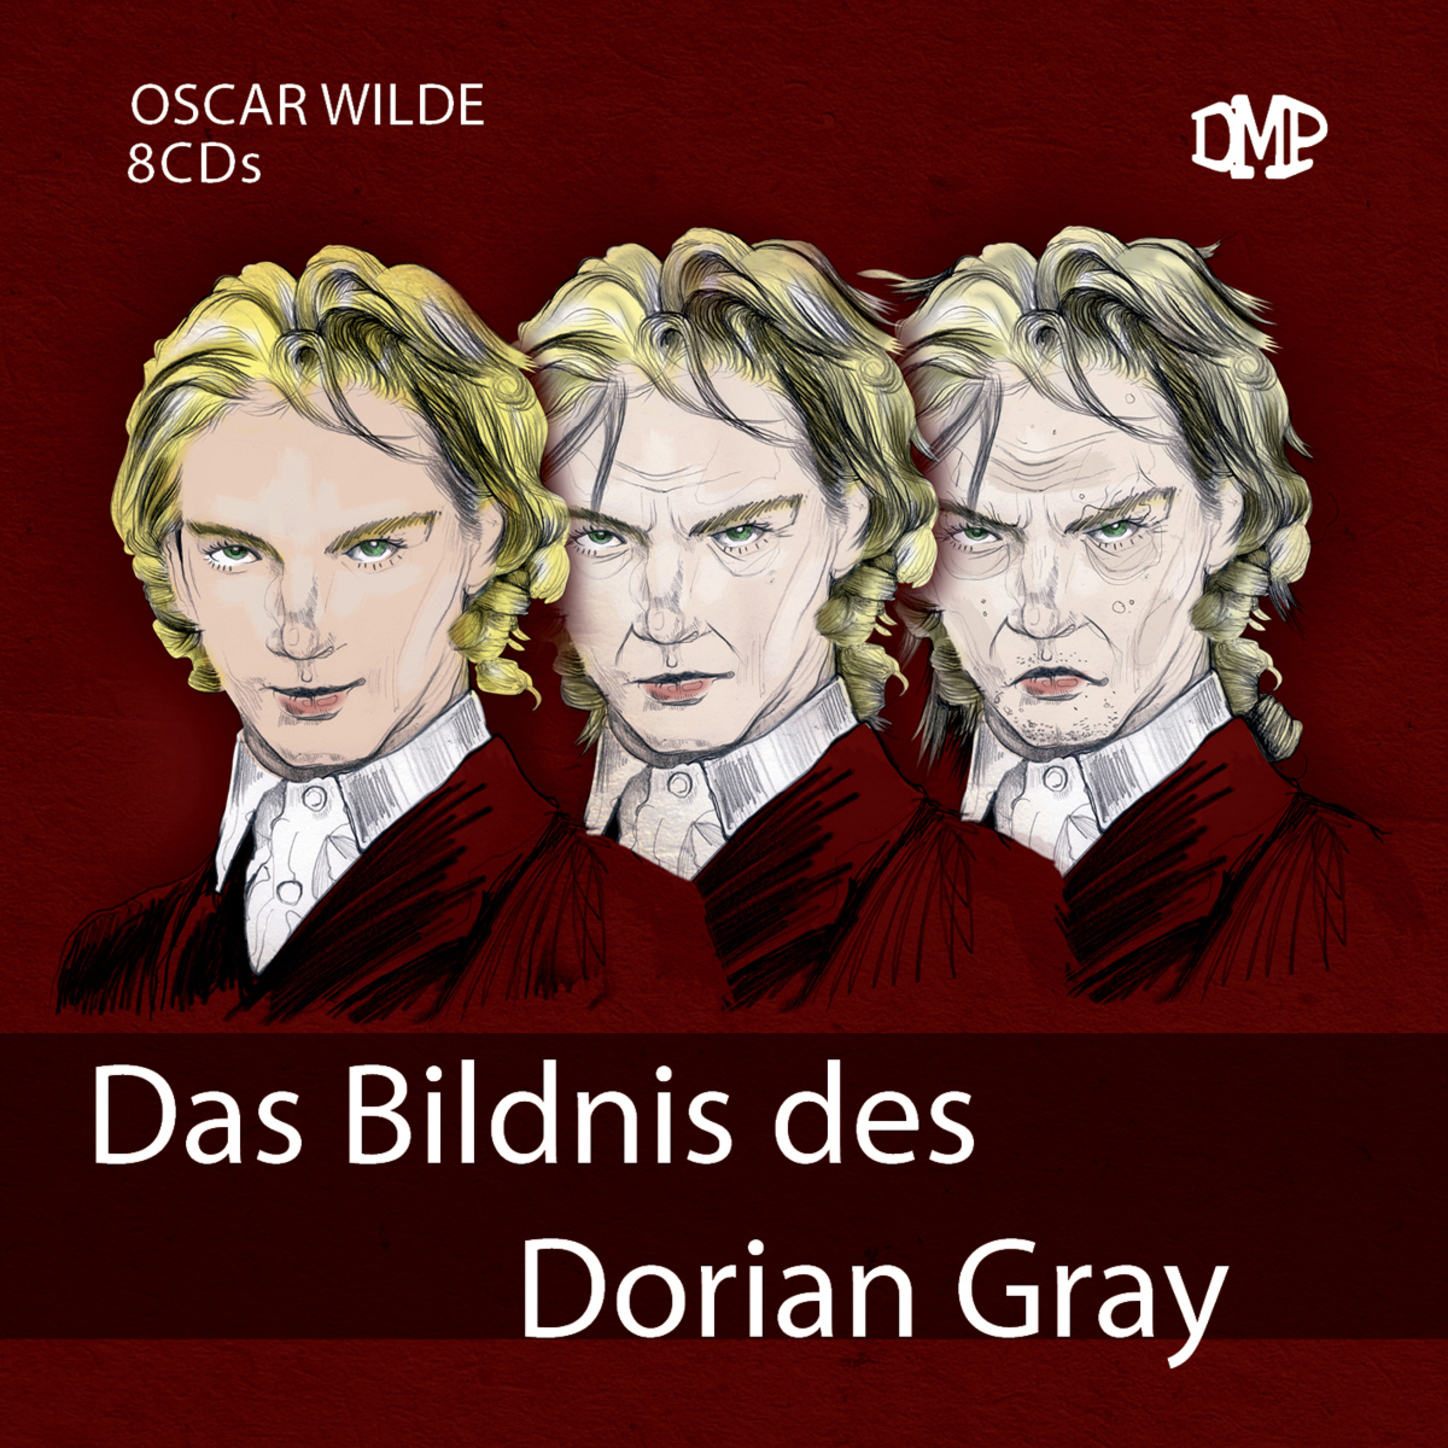 Das Bildnis des Dorian Gray иллюстрации